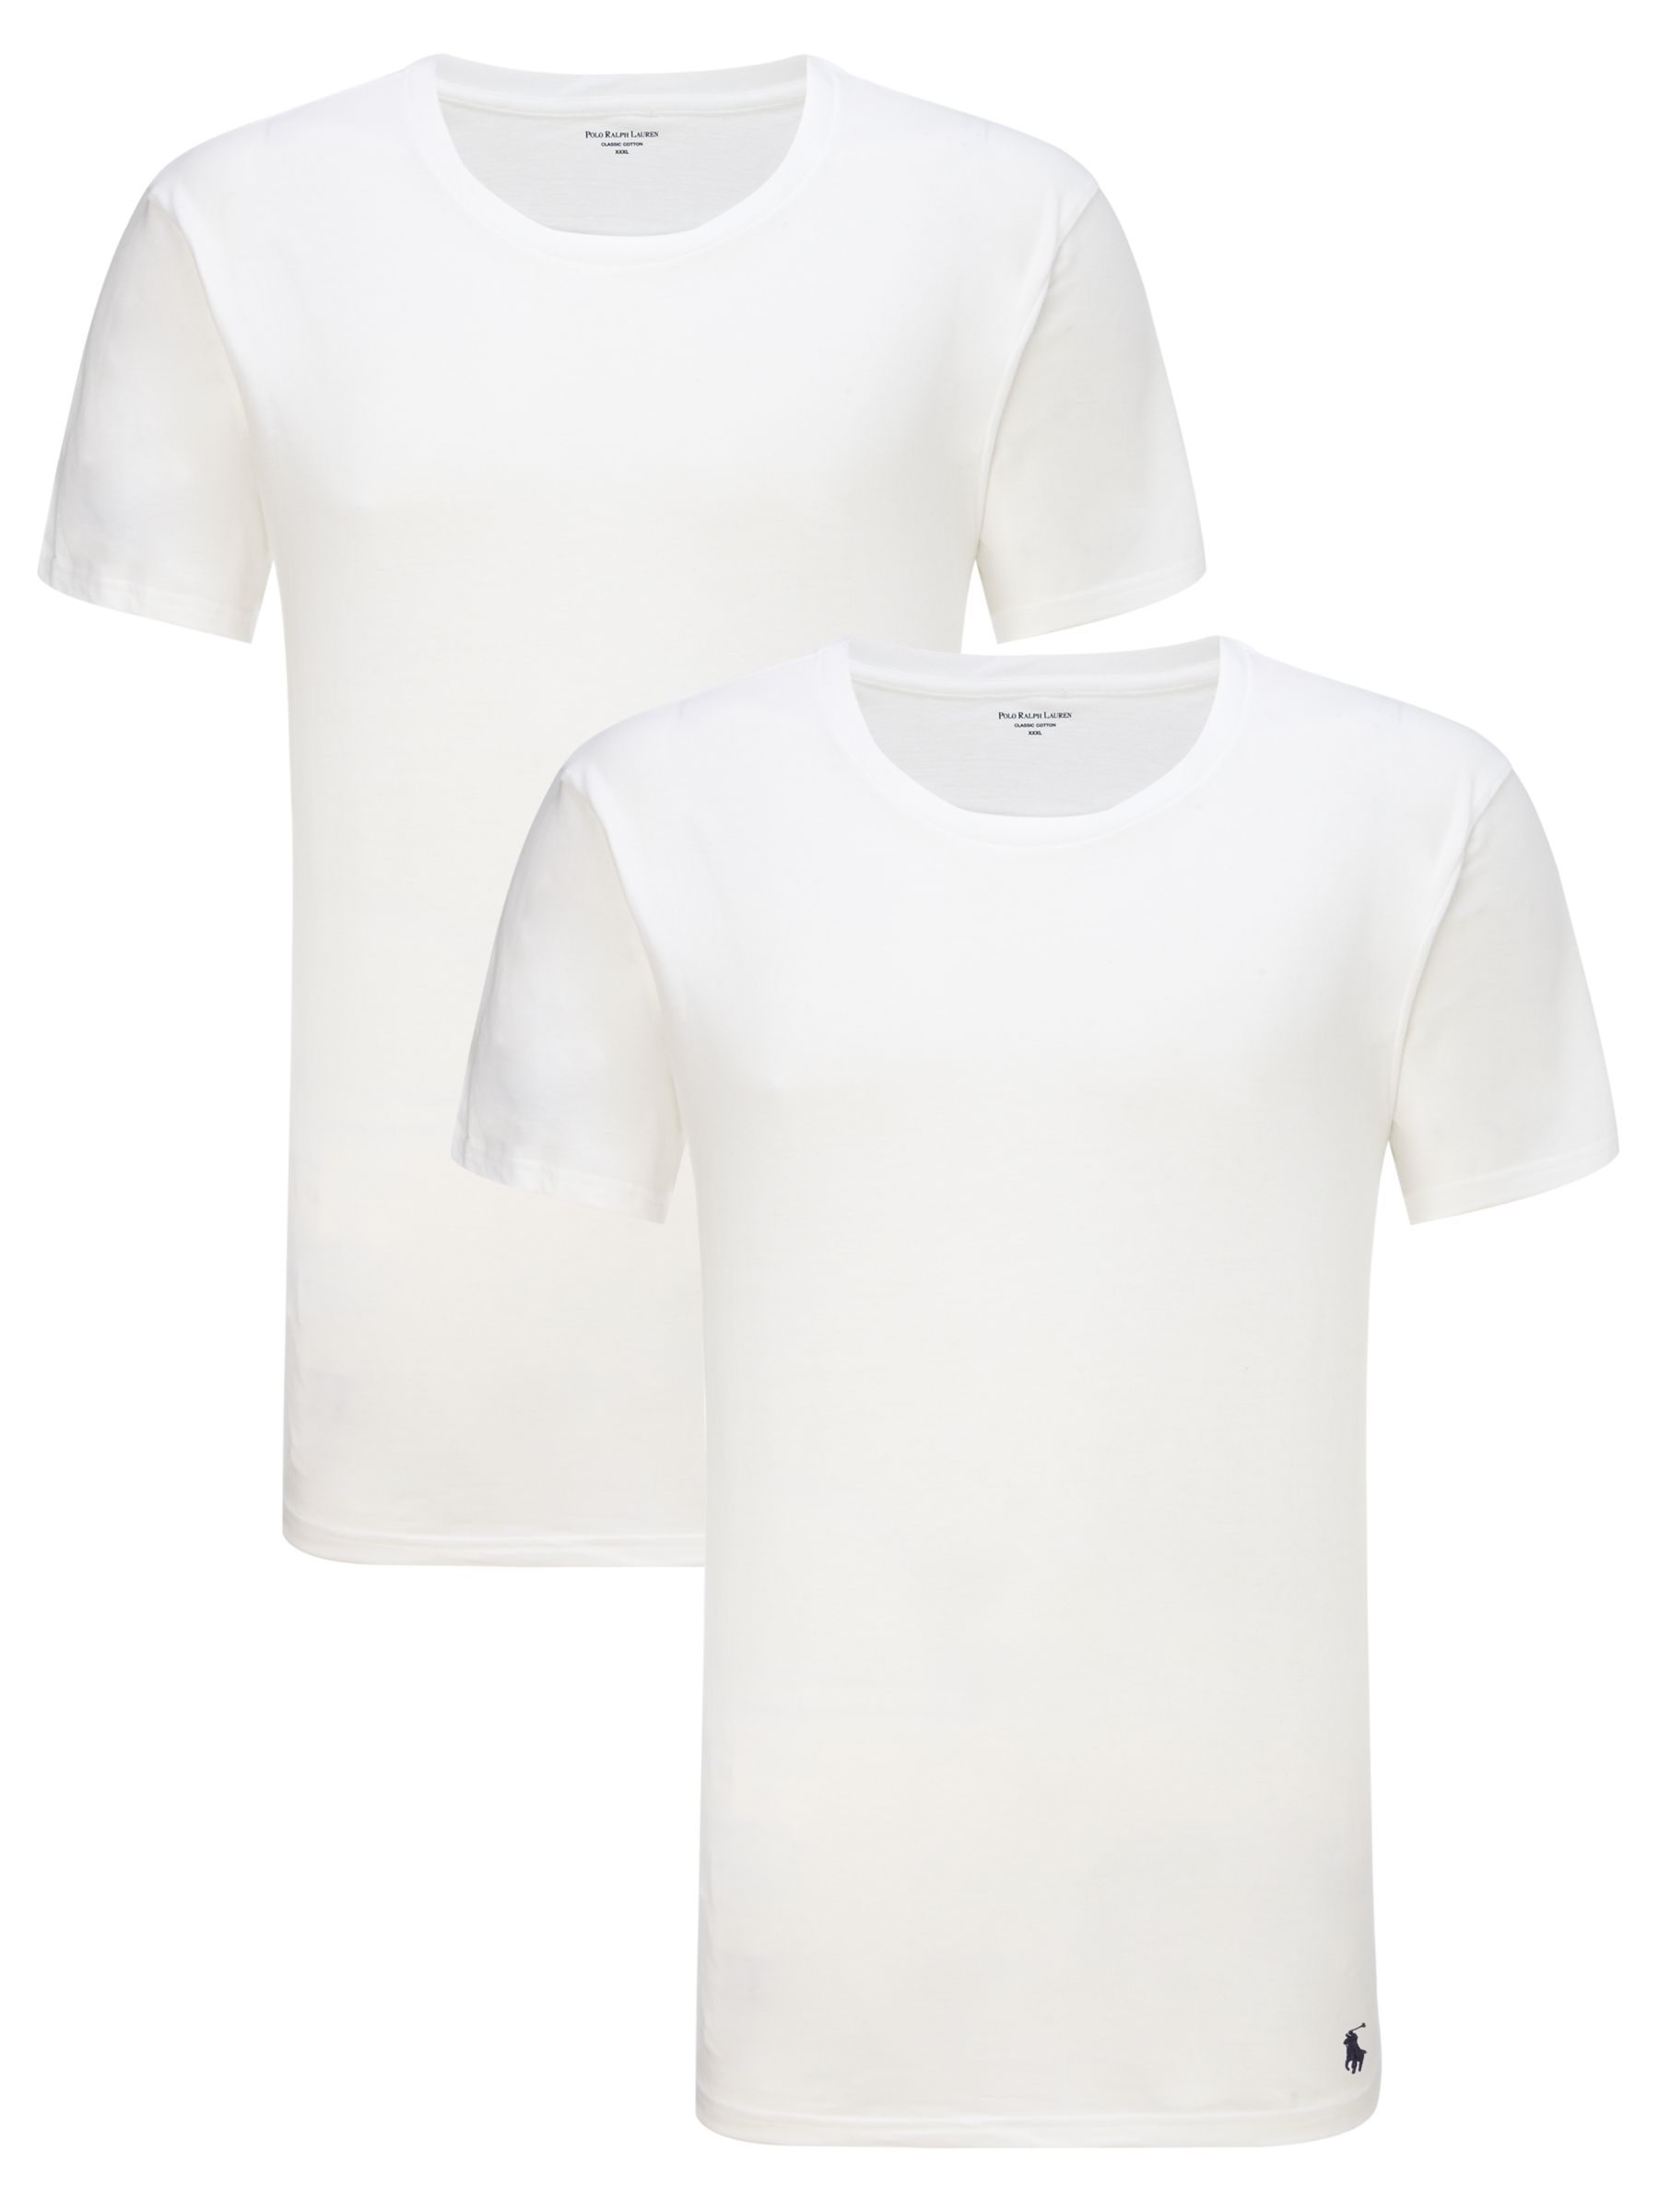 Polo Ralph Lauren Crew Neck T-Shirt, Pack of 2, White